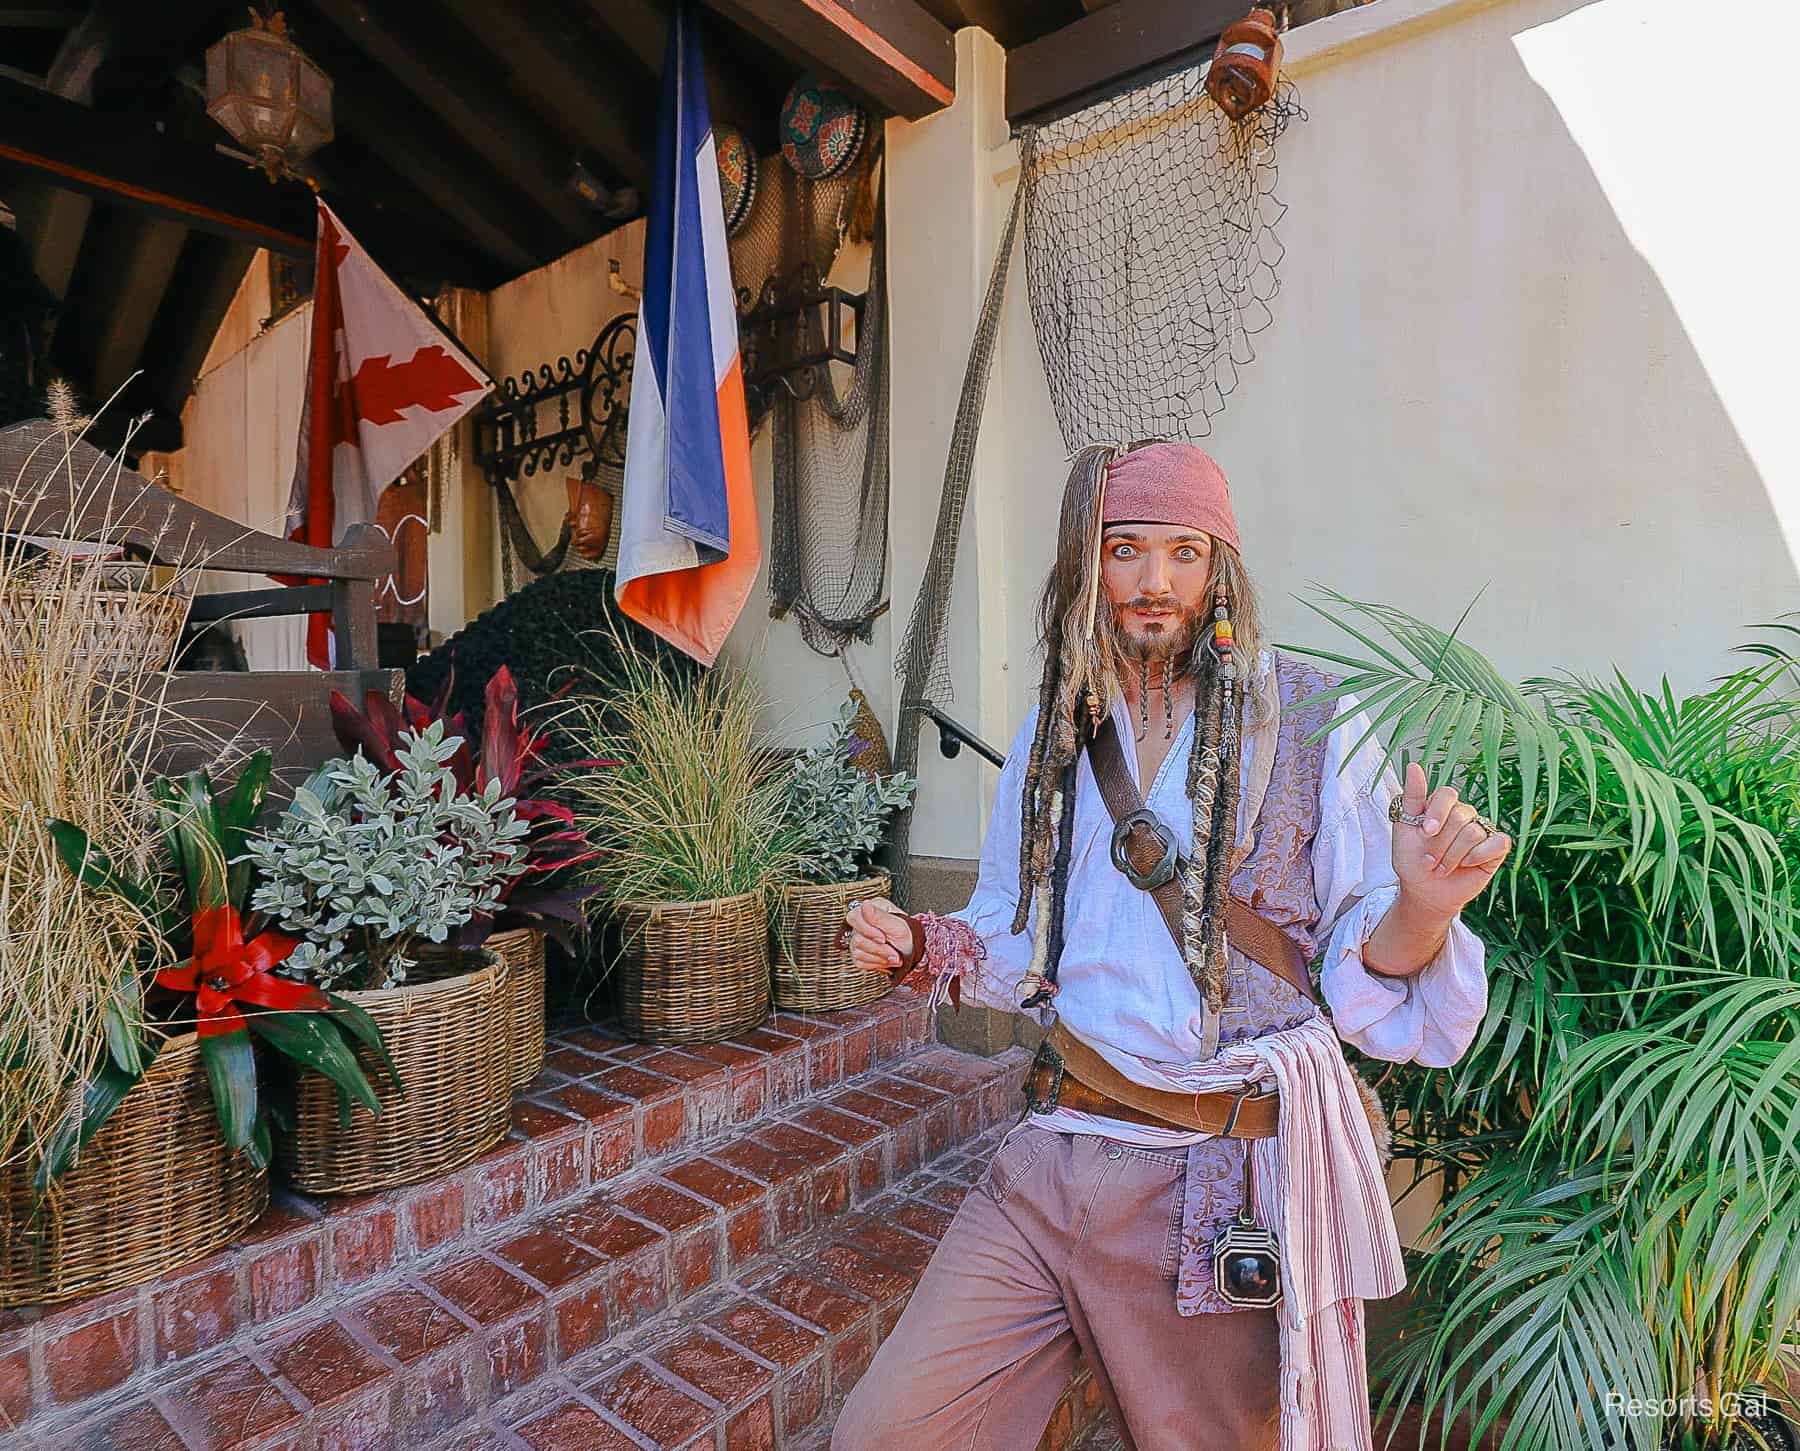 Jack Sparrow near the Adventureland stage. 